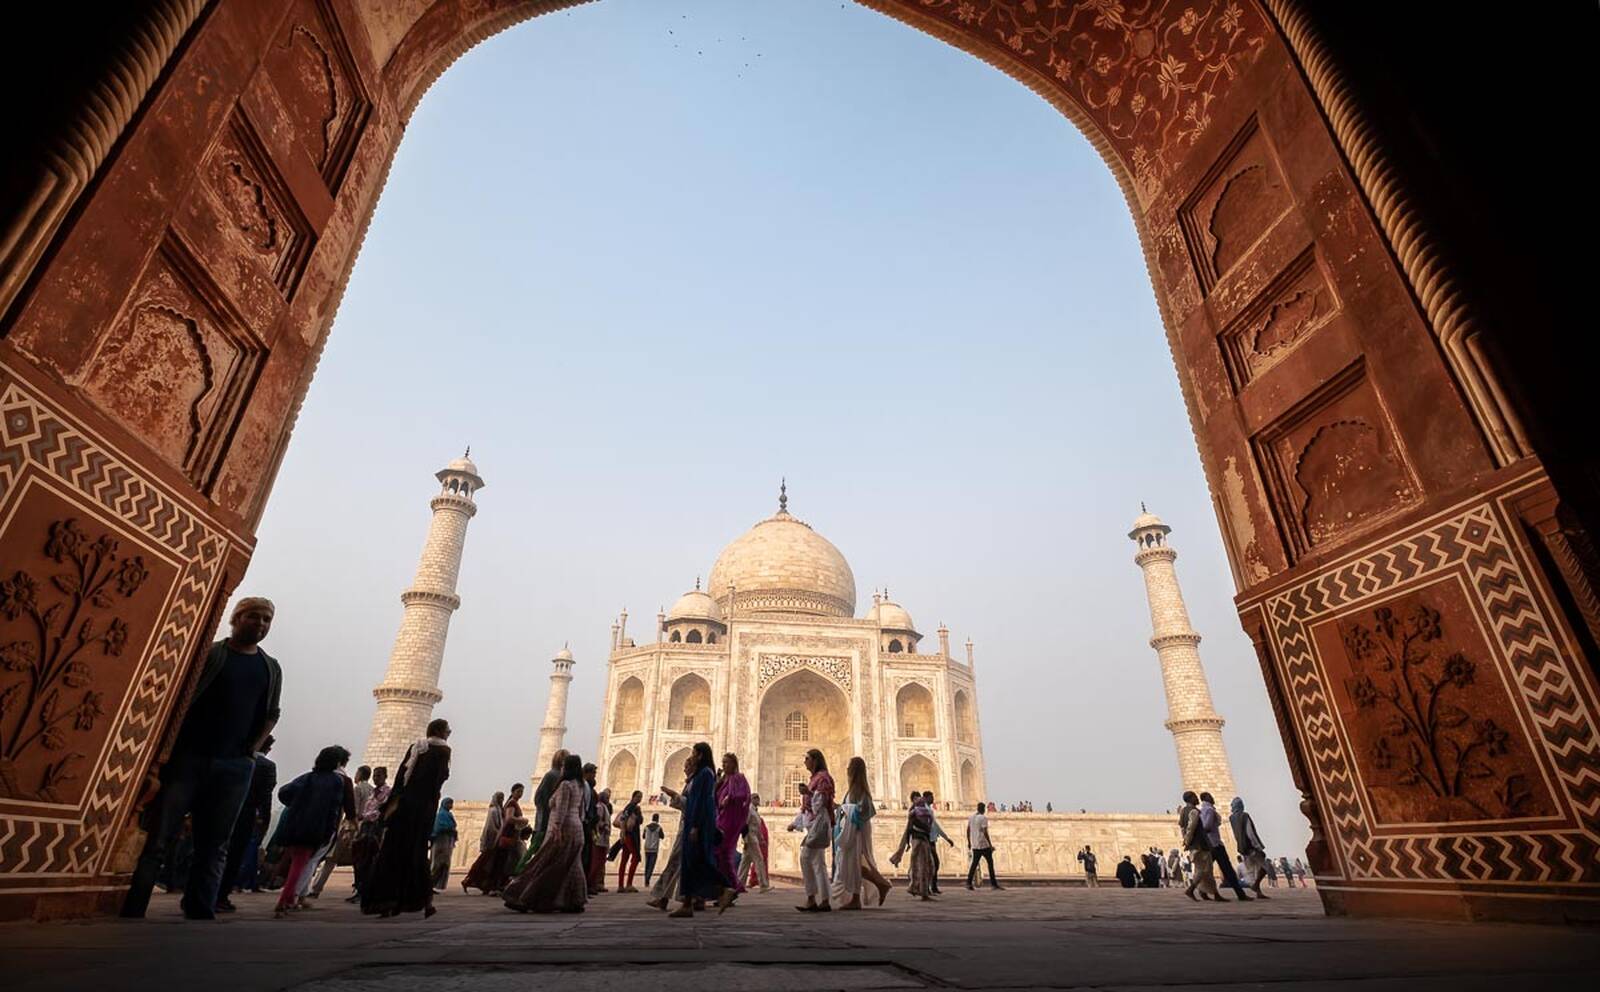 Image of Taj Mahal - through the Gates by Darlene Hildebrandt